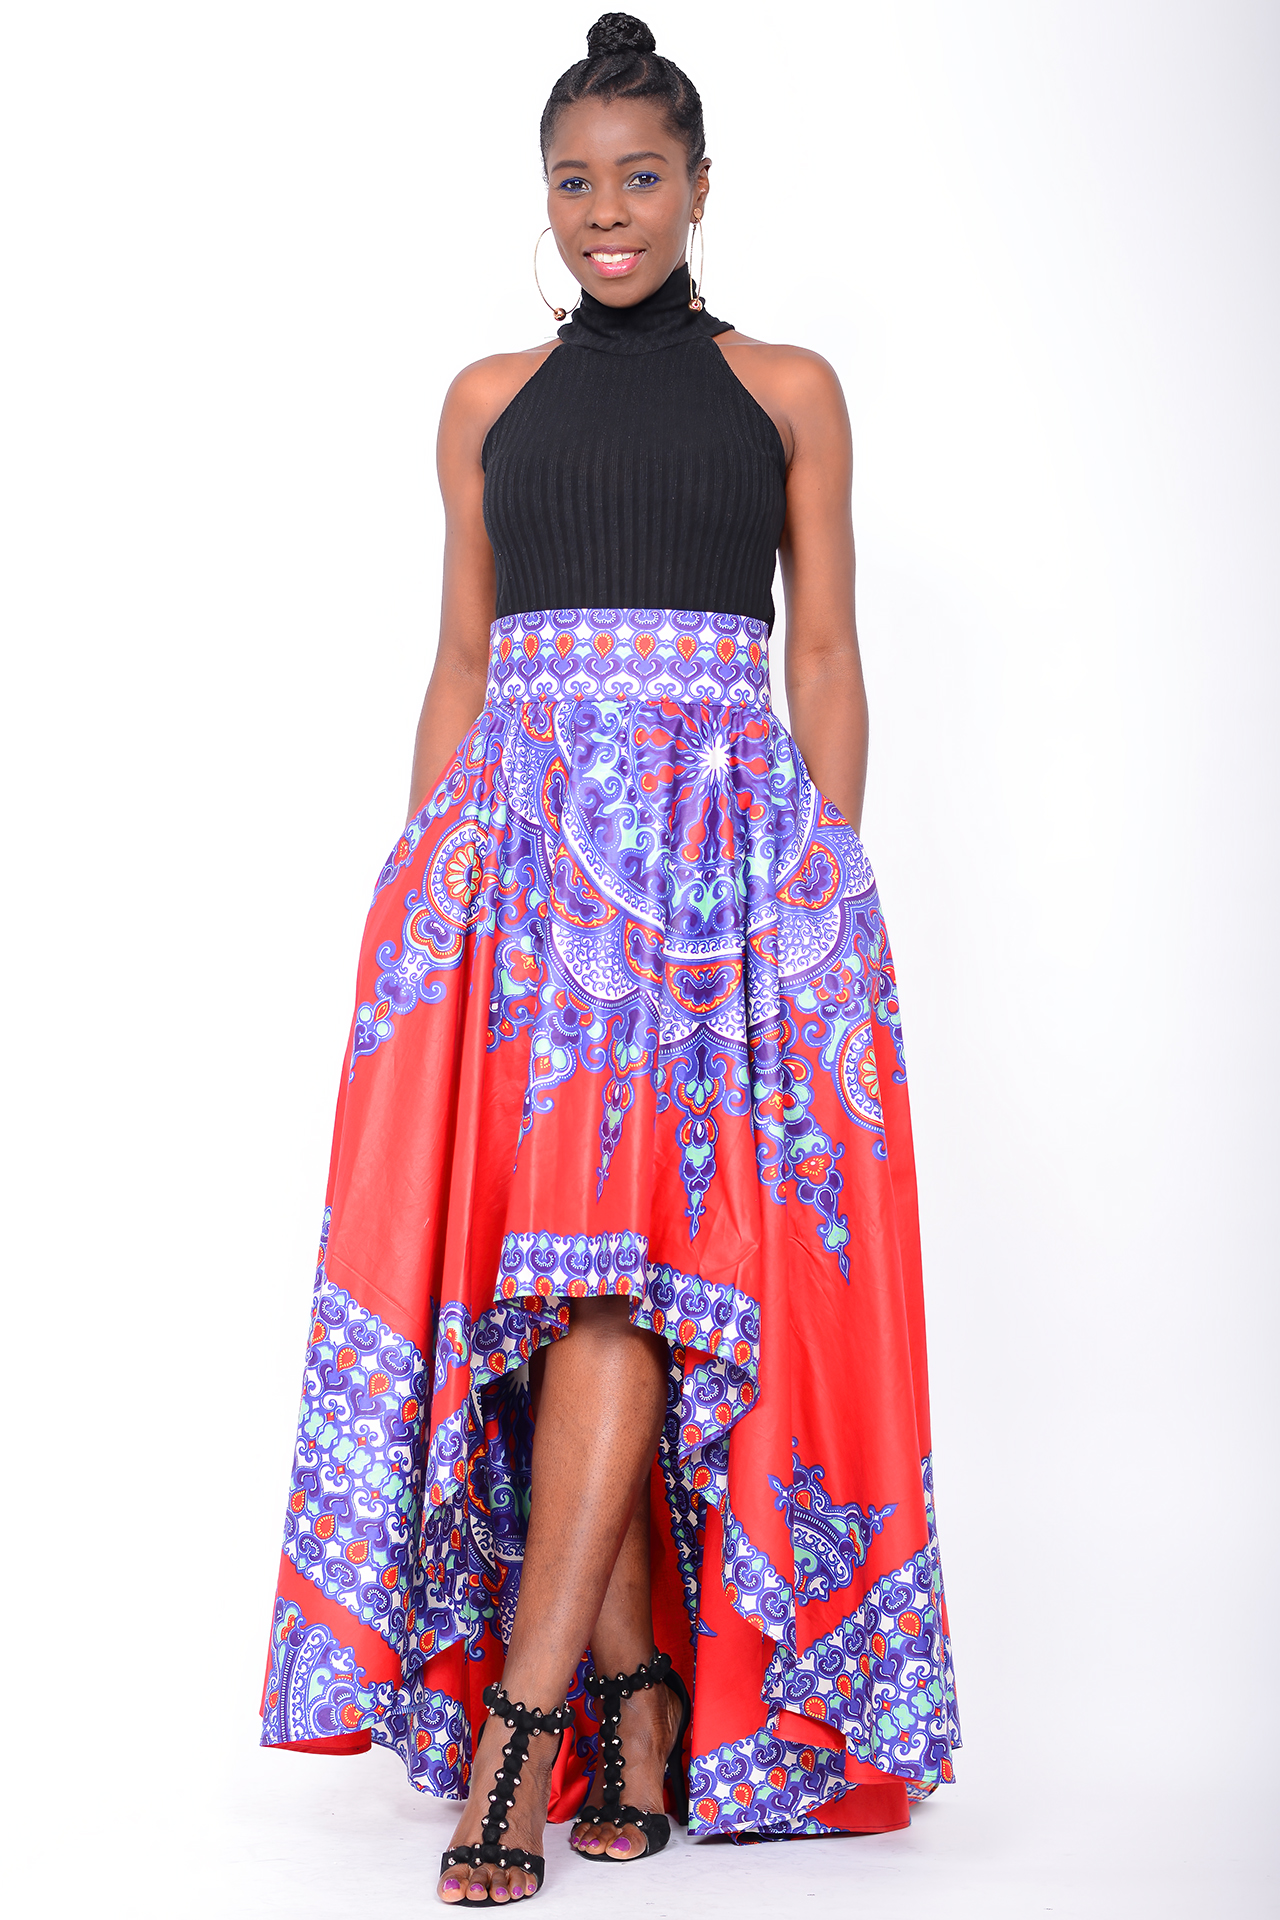 Afri Mode - Euge-W Kollektion 2022 - neue Styles im September